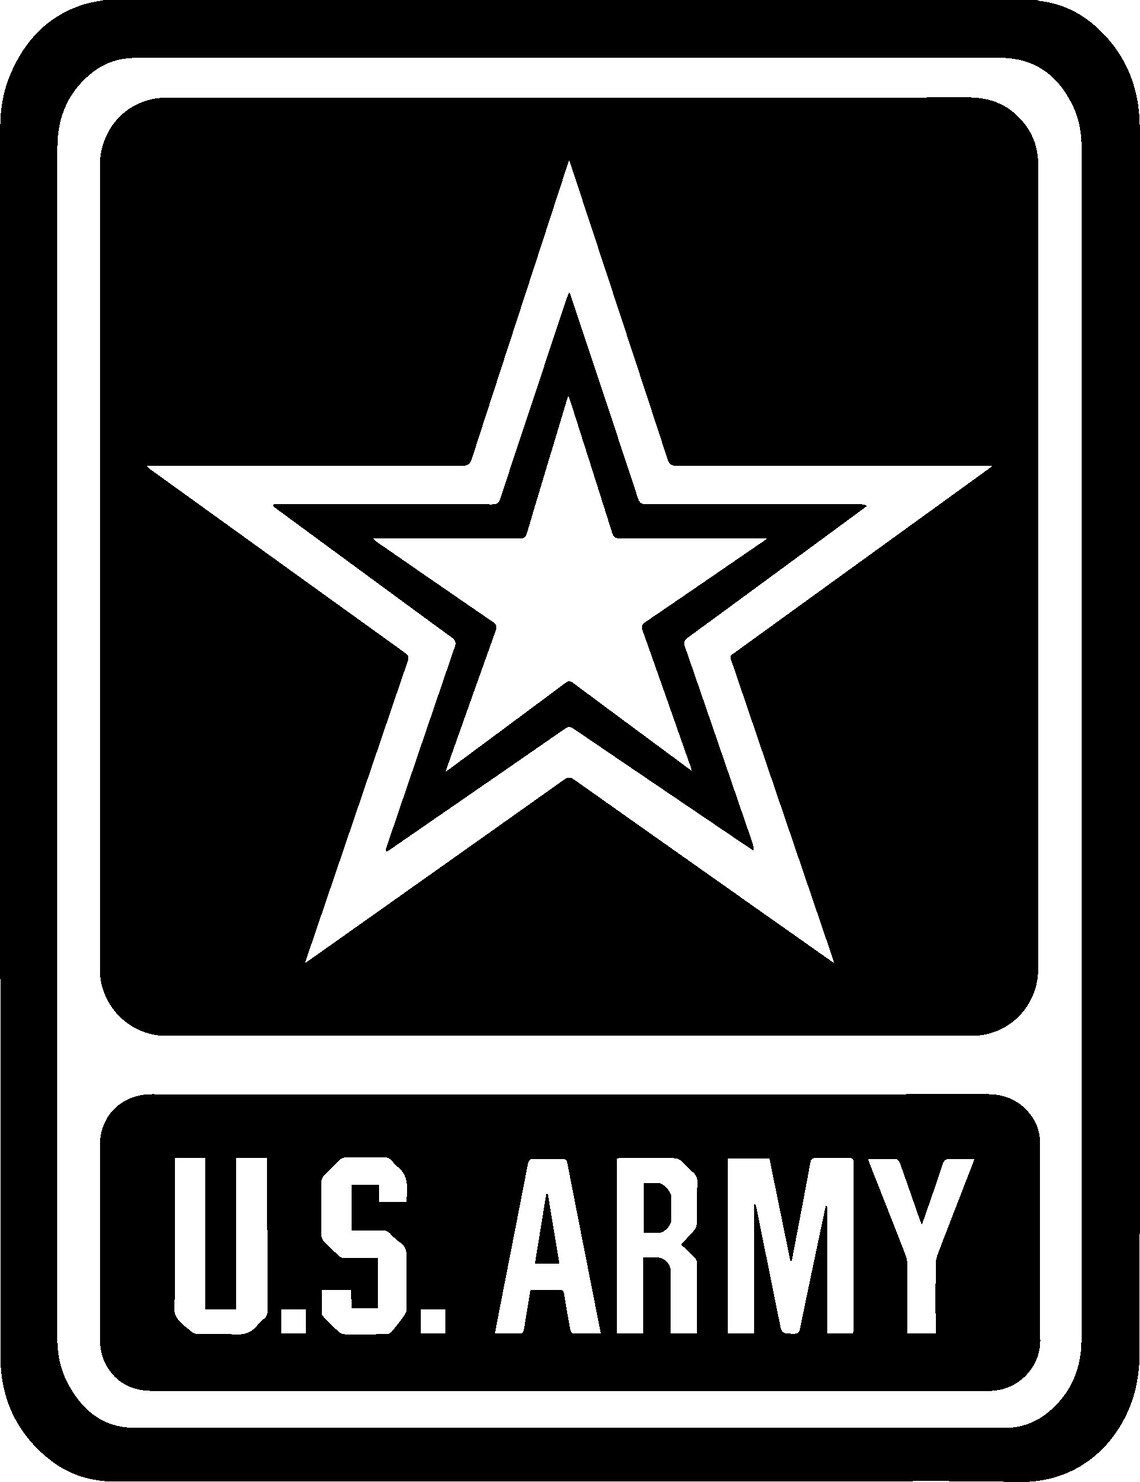 U.S. Army Emblem SVG Military Logo Cut File DXF PNG Digital Download ...